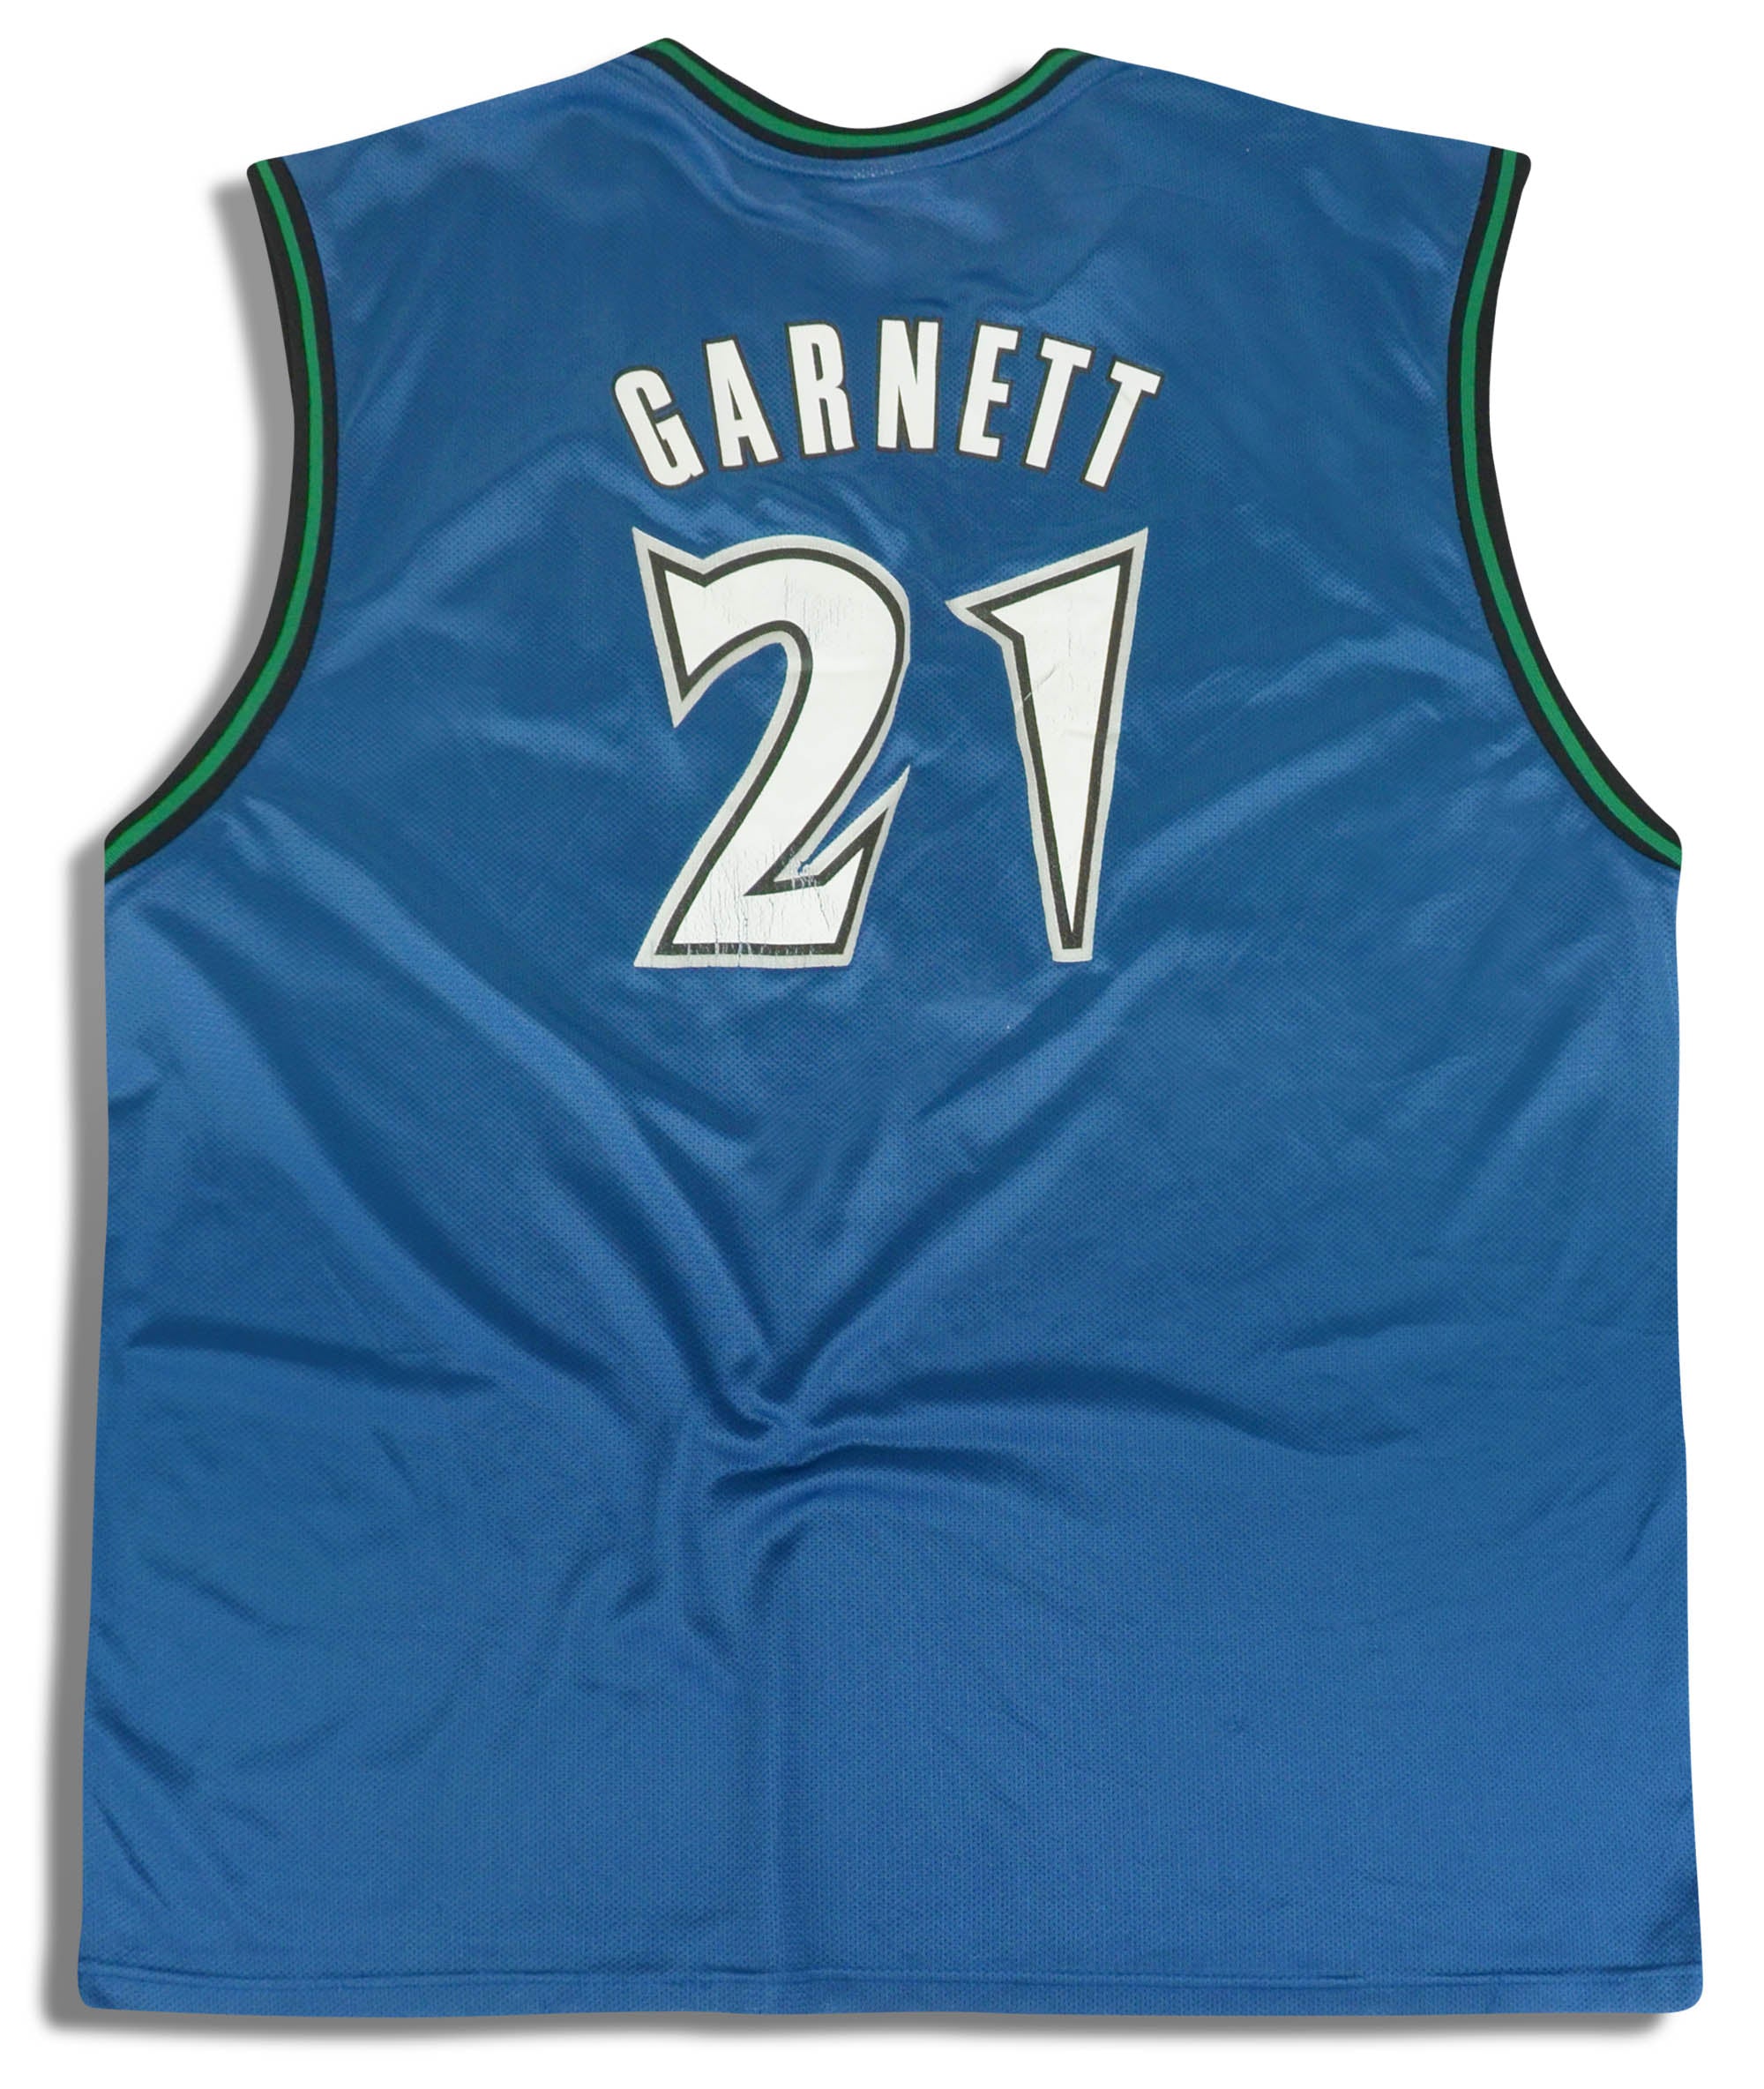 Kevin Garnett Throwback Timberwolves Jersey  Vintage Celtics Gear -  Classic American Sports